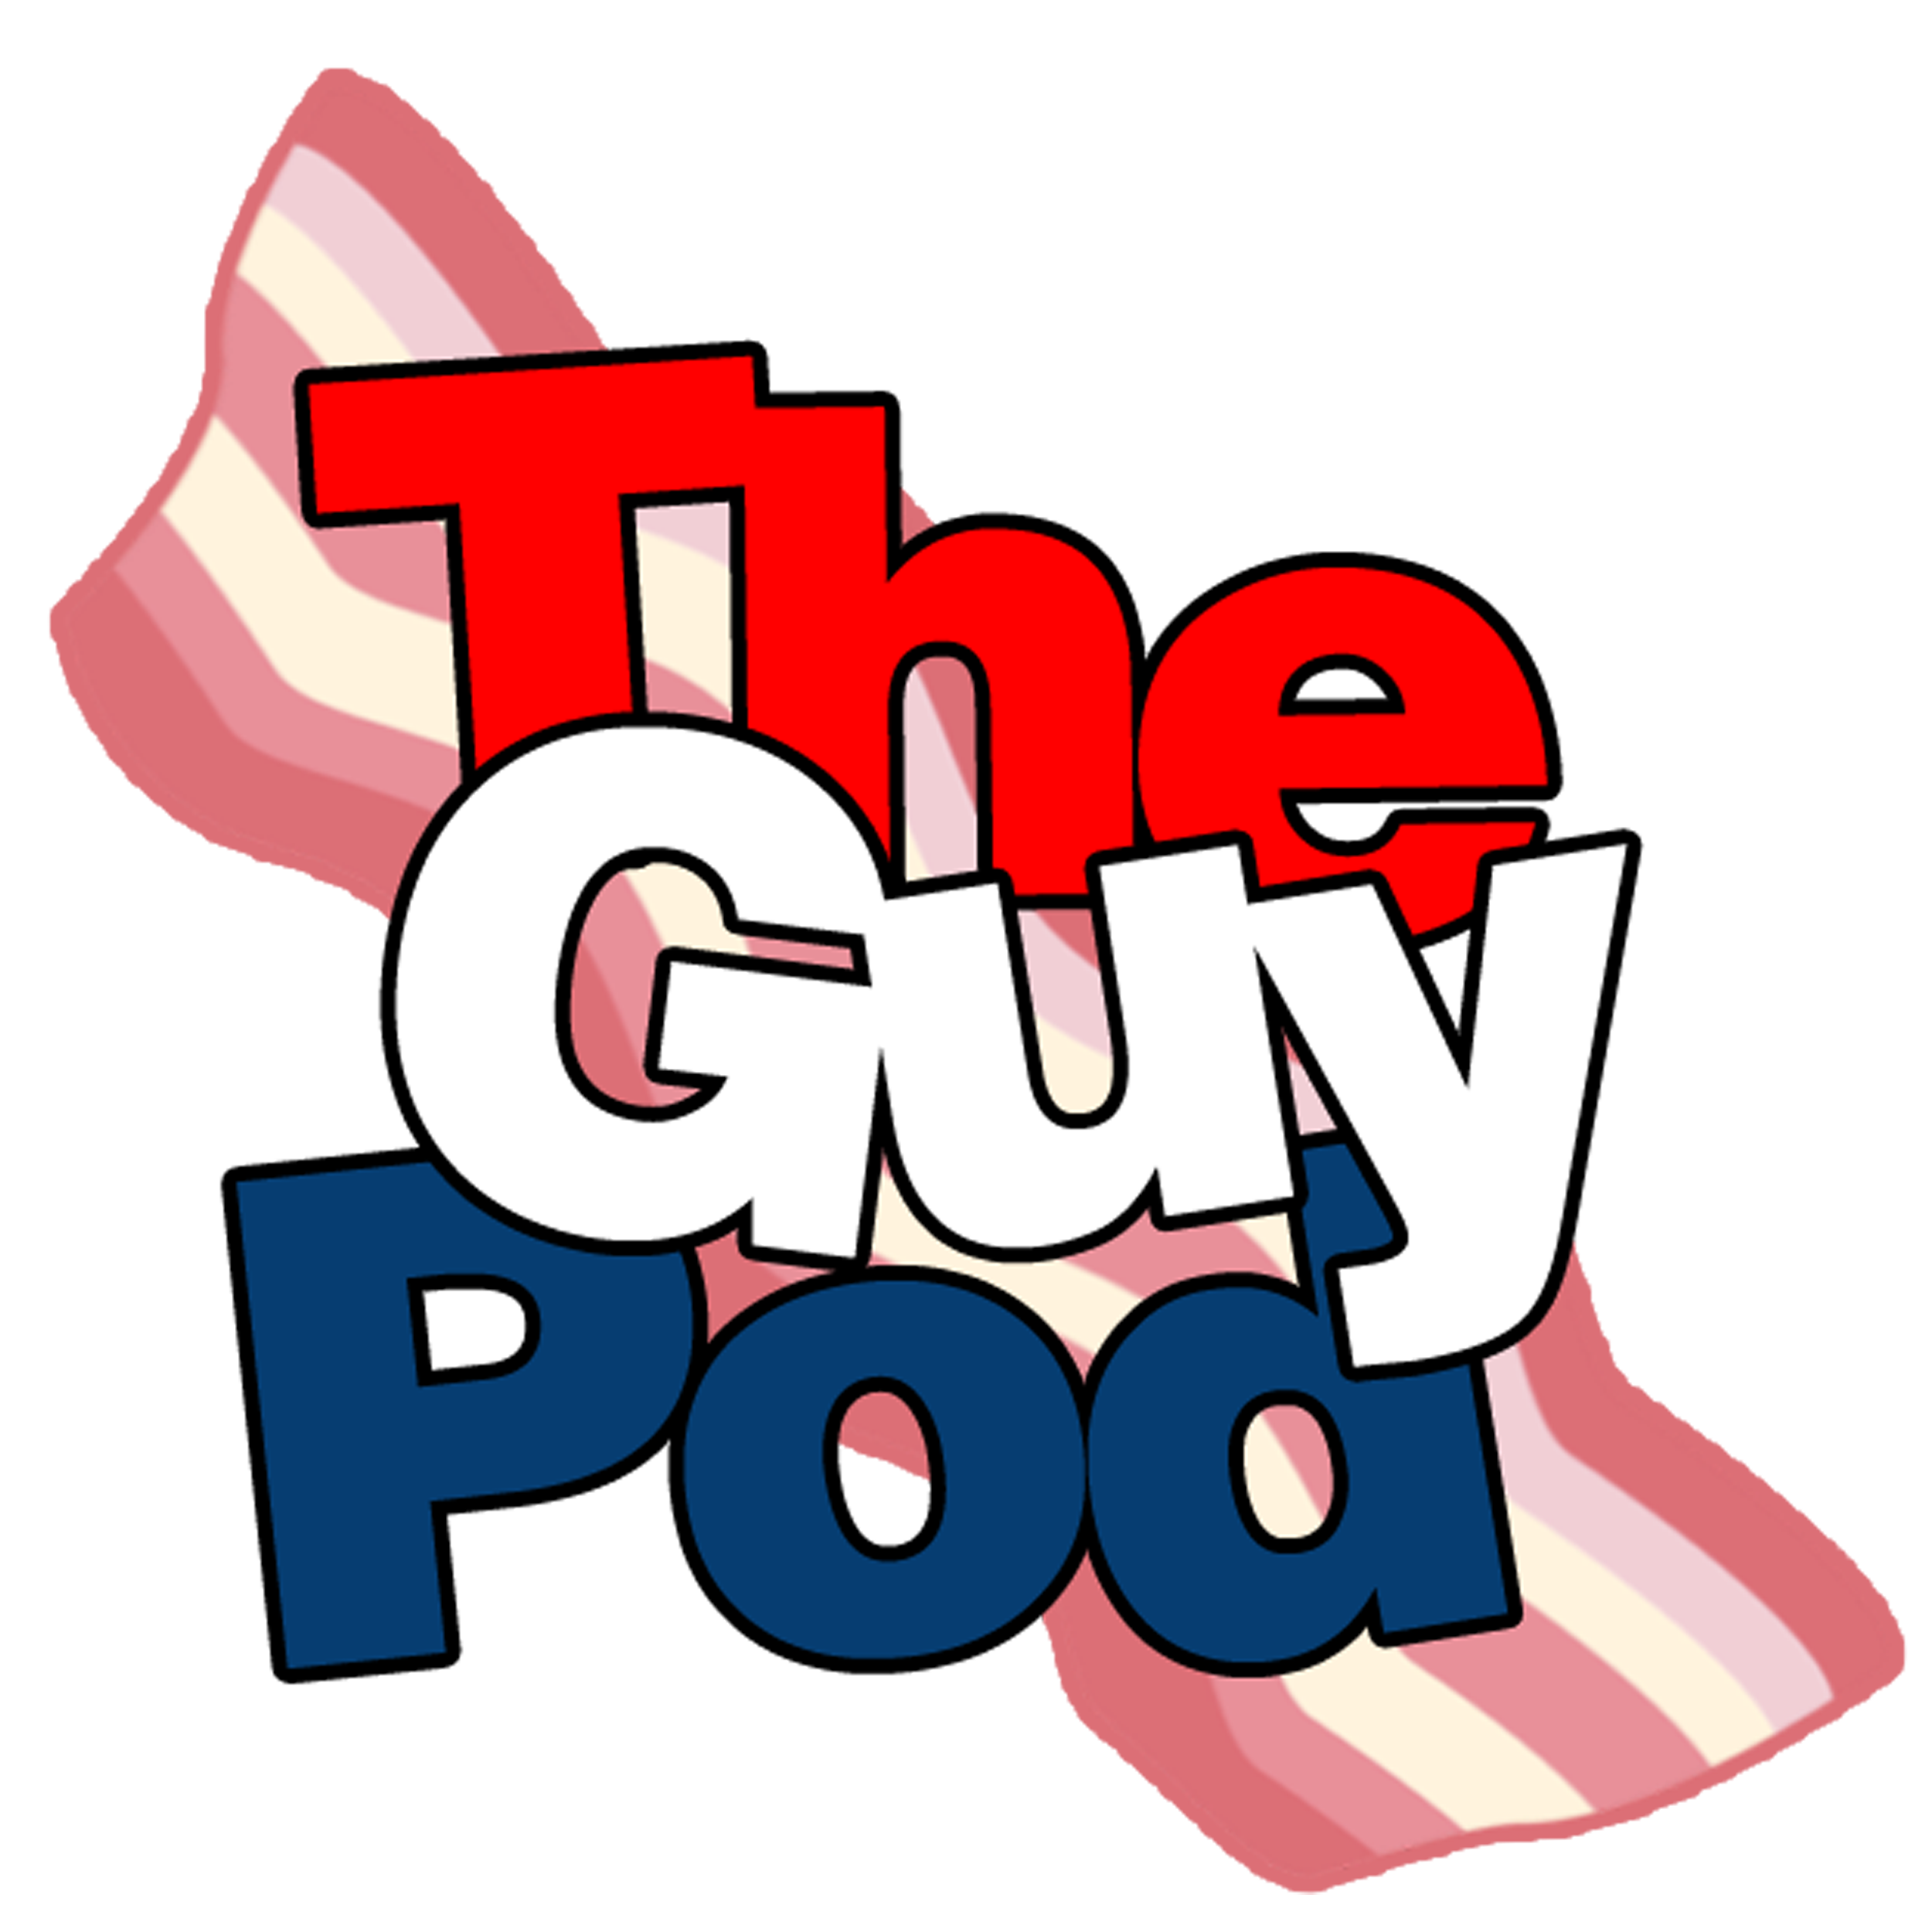 The Guy Pod